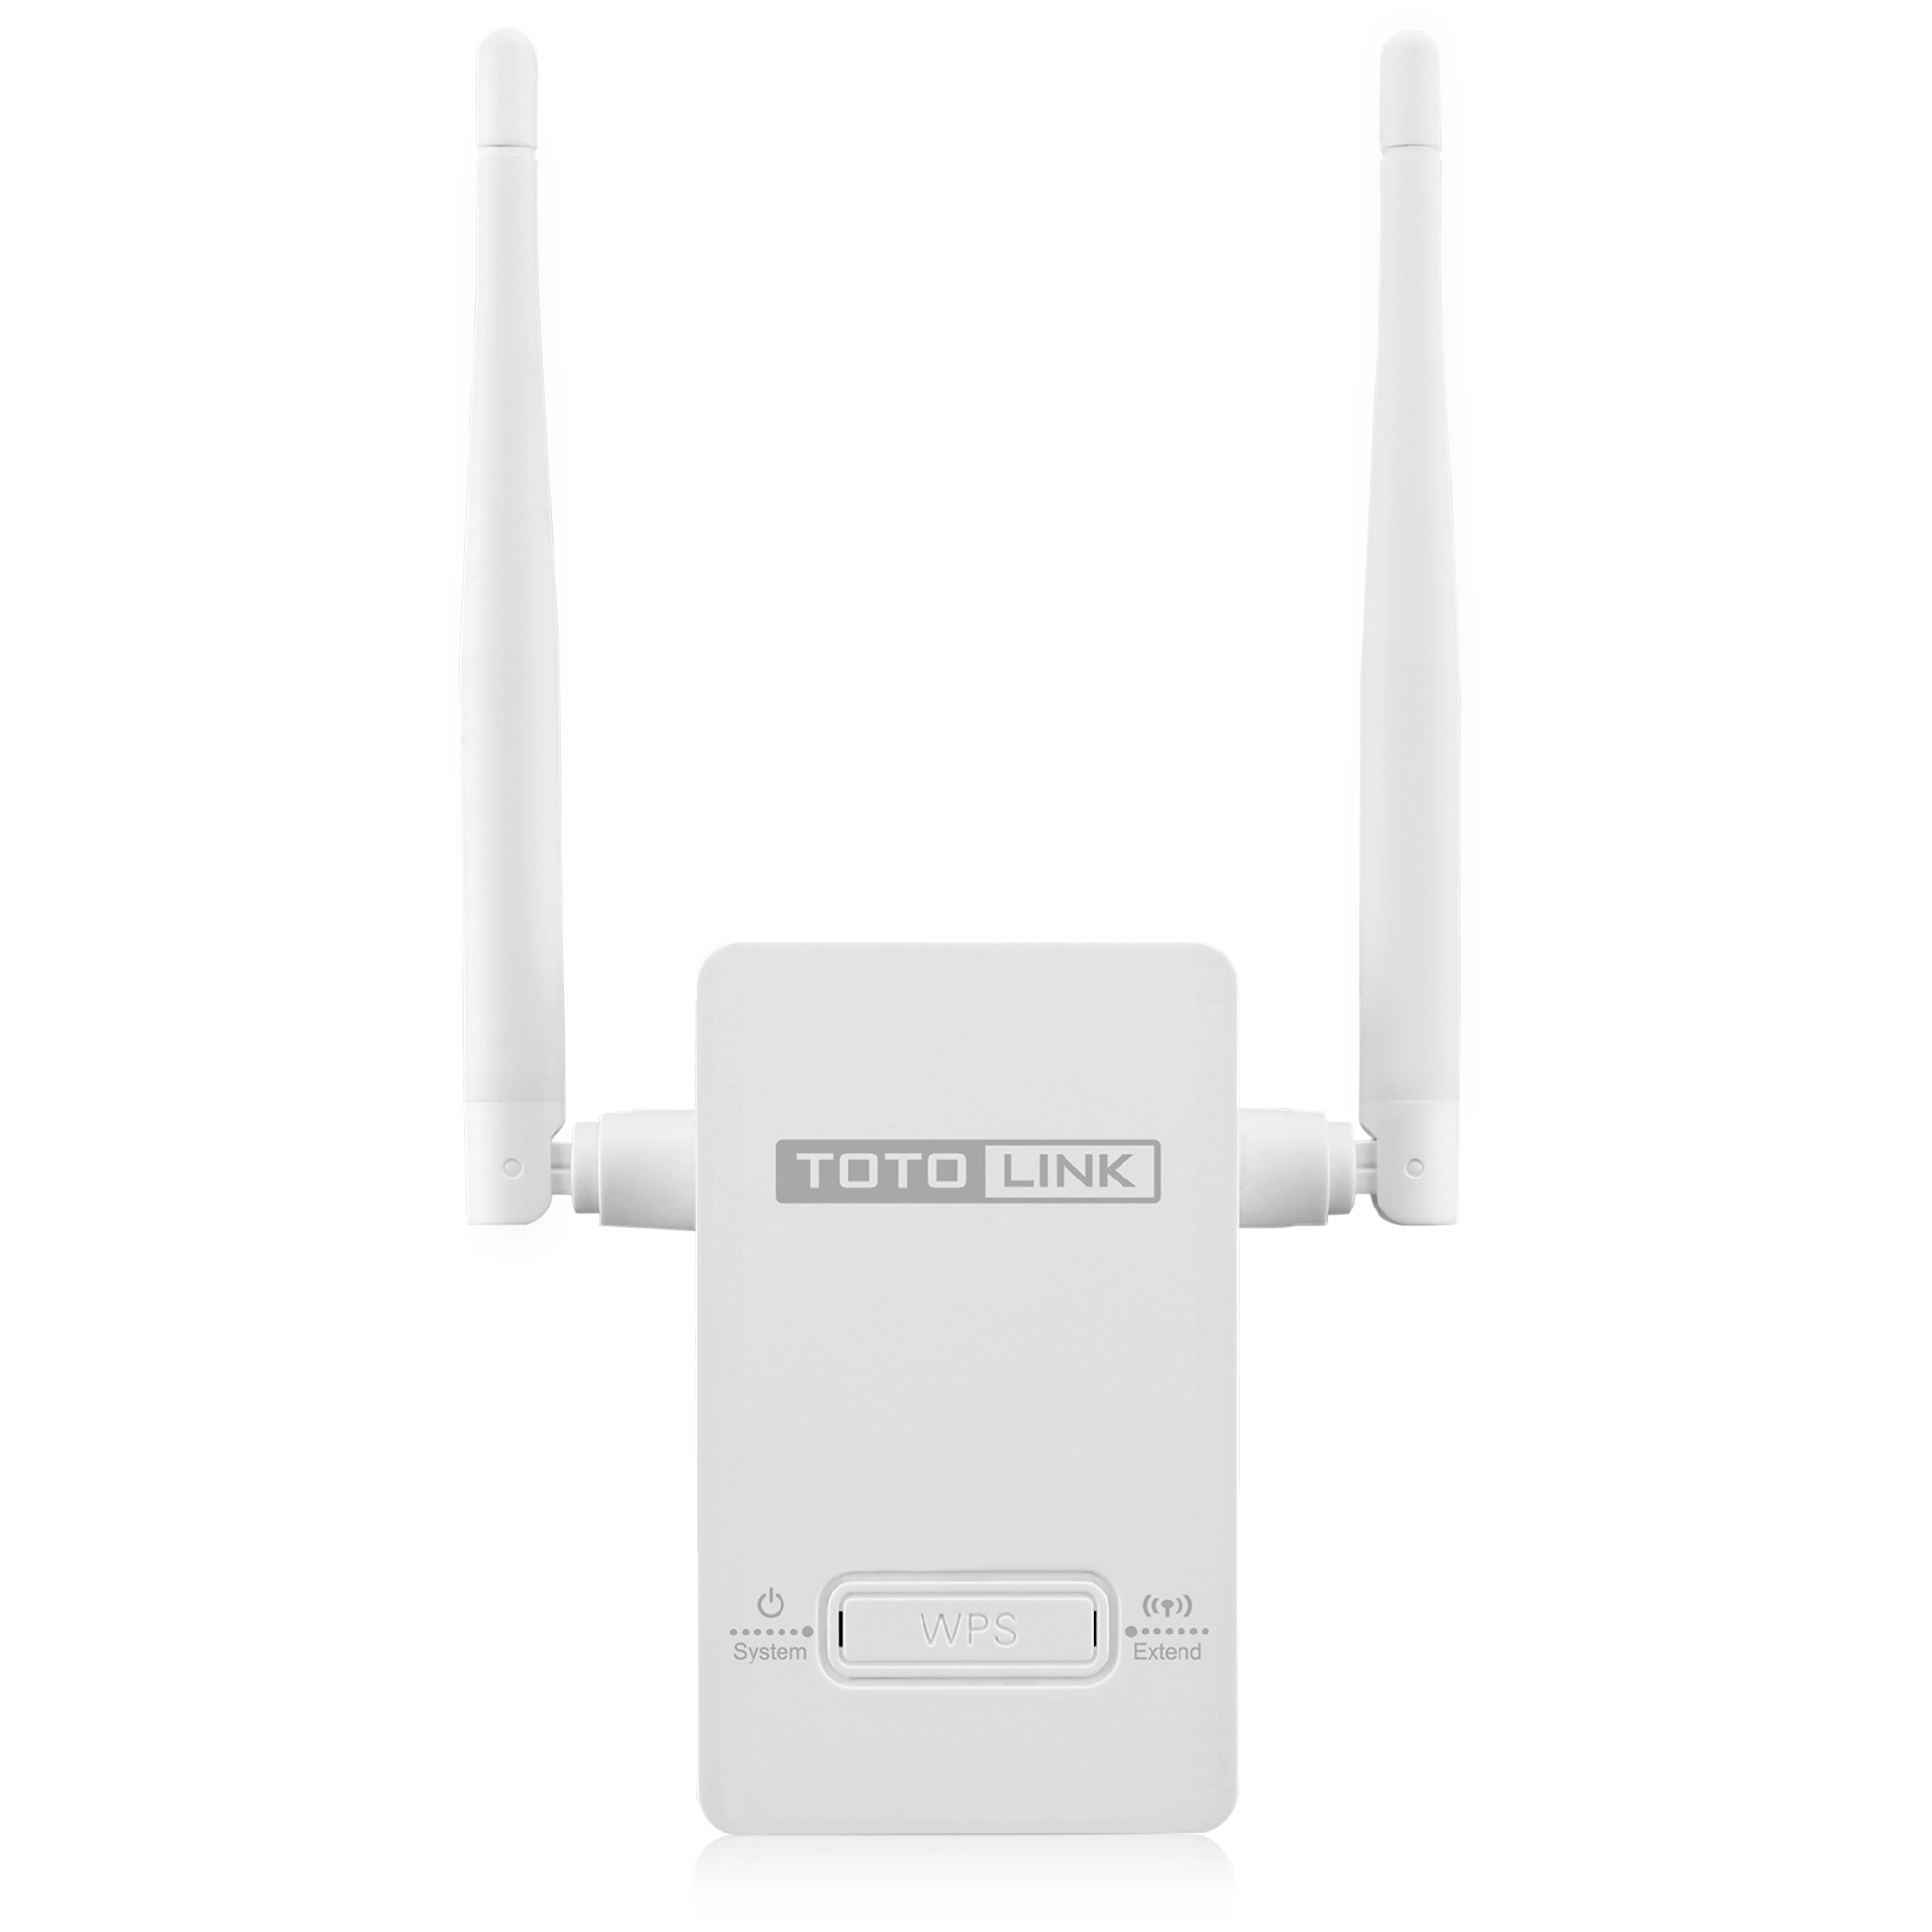 TOTOLINK (EX201) 300Mbps Wireless N Range Extender